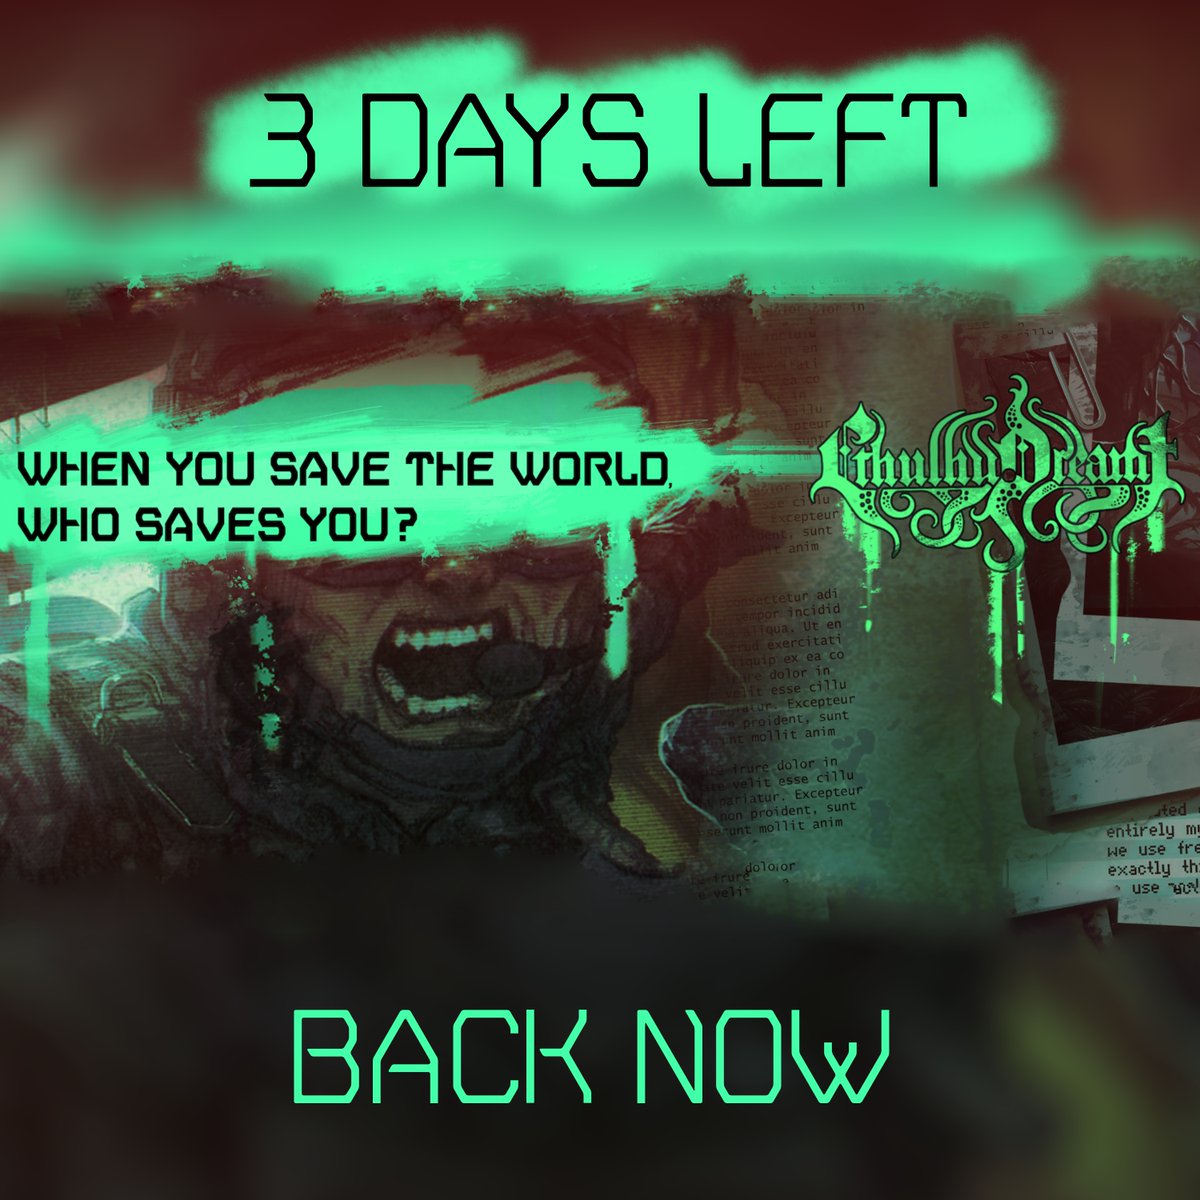 3 Days left to back the Cthulhu Dreamt TTRPG Kickstarter!

kickstarter.com/projects/actio…

#cthulhudreamt #cthulhu #ttrpg #horrorgram #lovecraft #lovecraftian #soundtrack #deathmetal